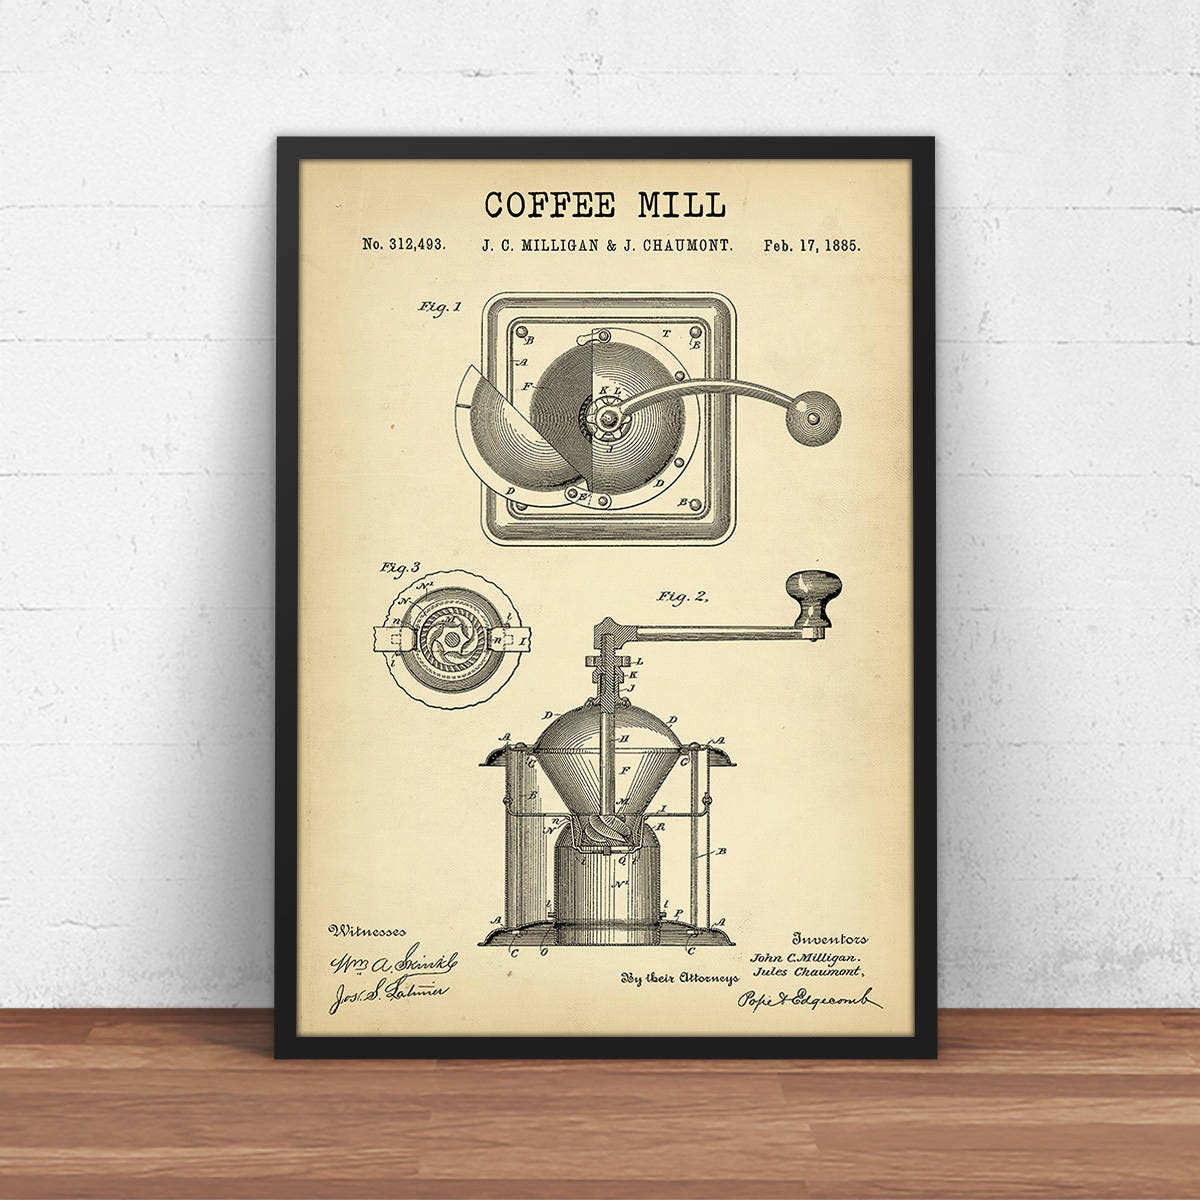 1907 Coffee Pot patent - vintage Art Print by Aged Pixel - Fine